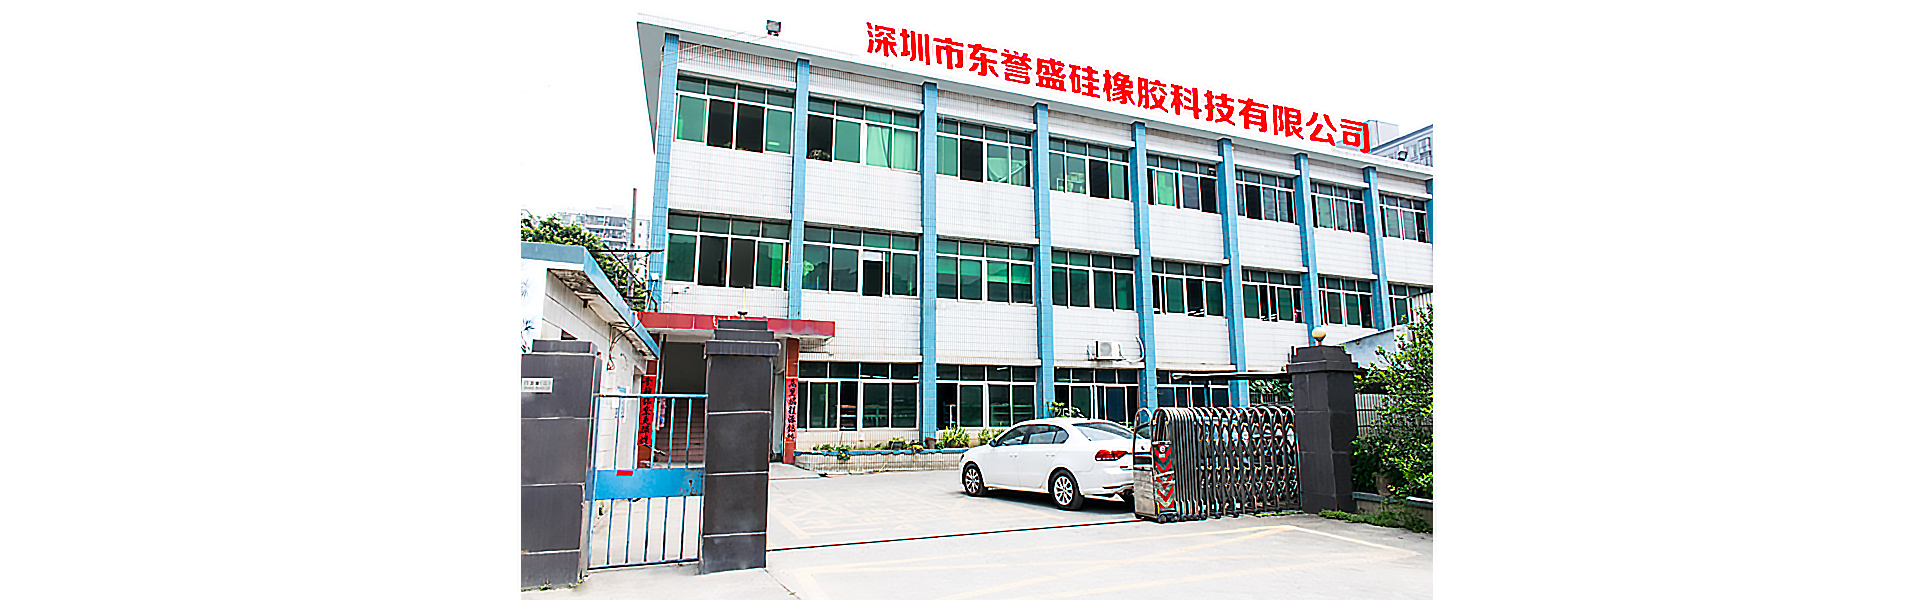 Shenzhen Dongyusheng Silicone&Rubber Technology Co., Ltd